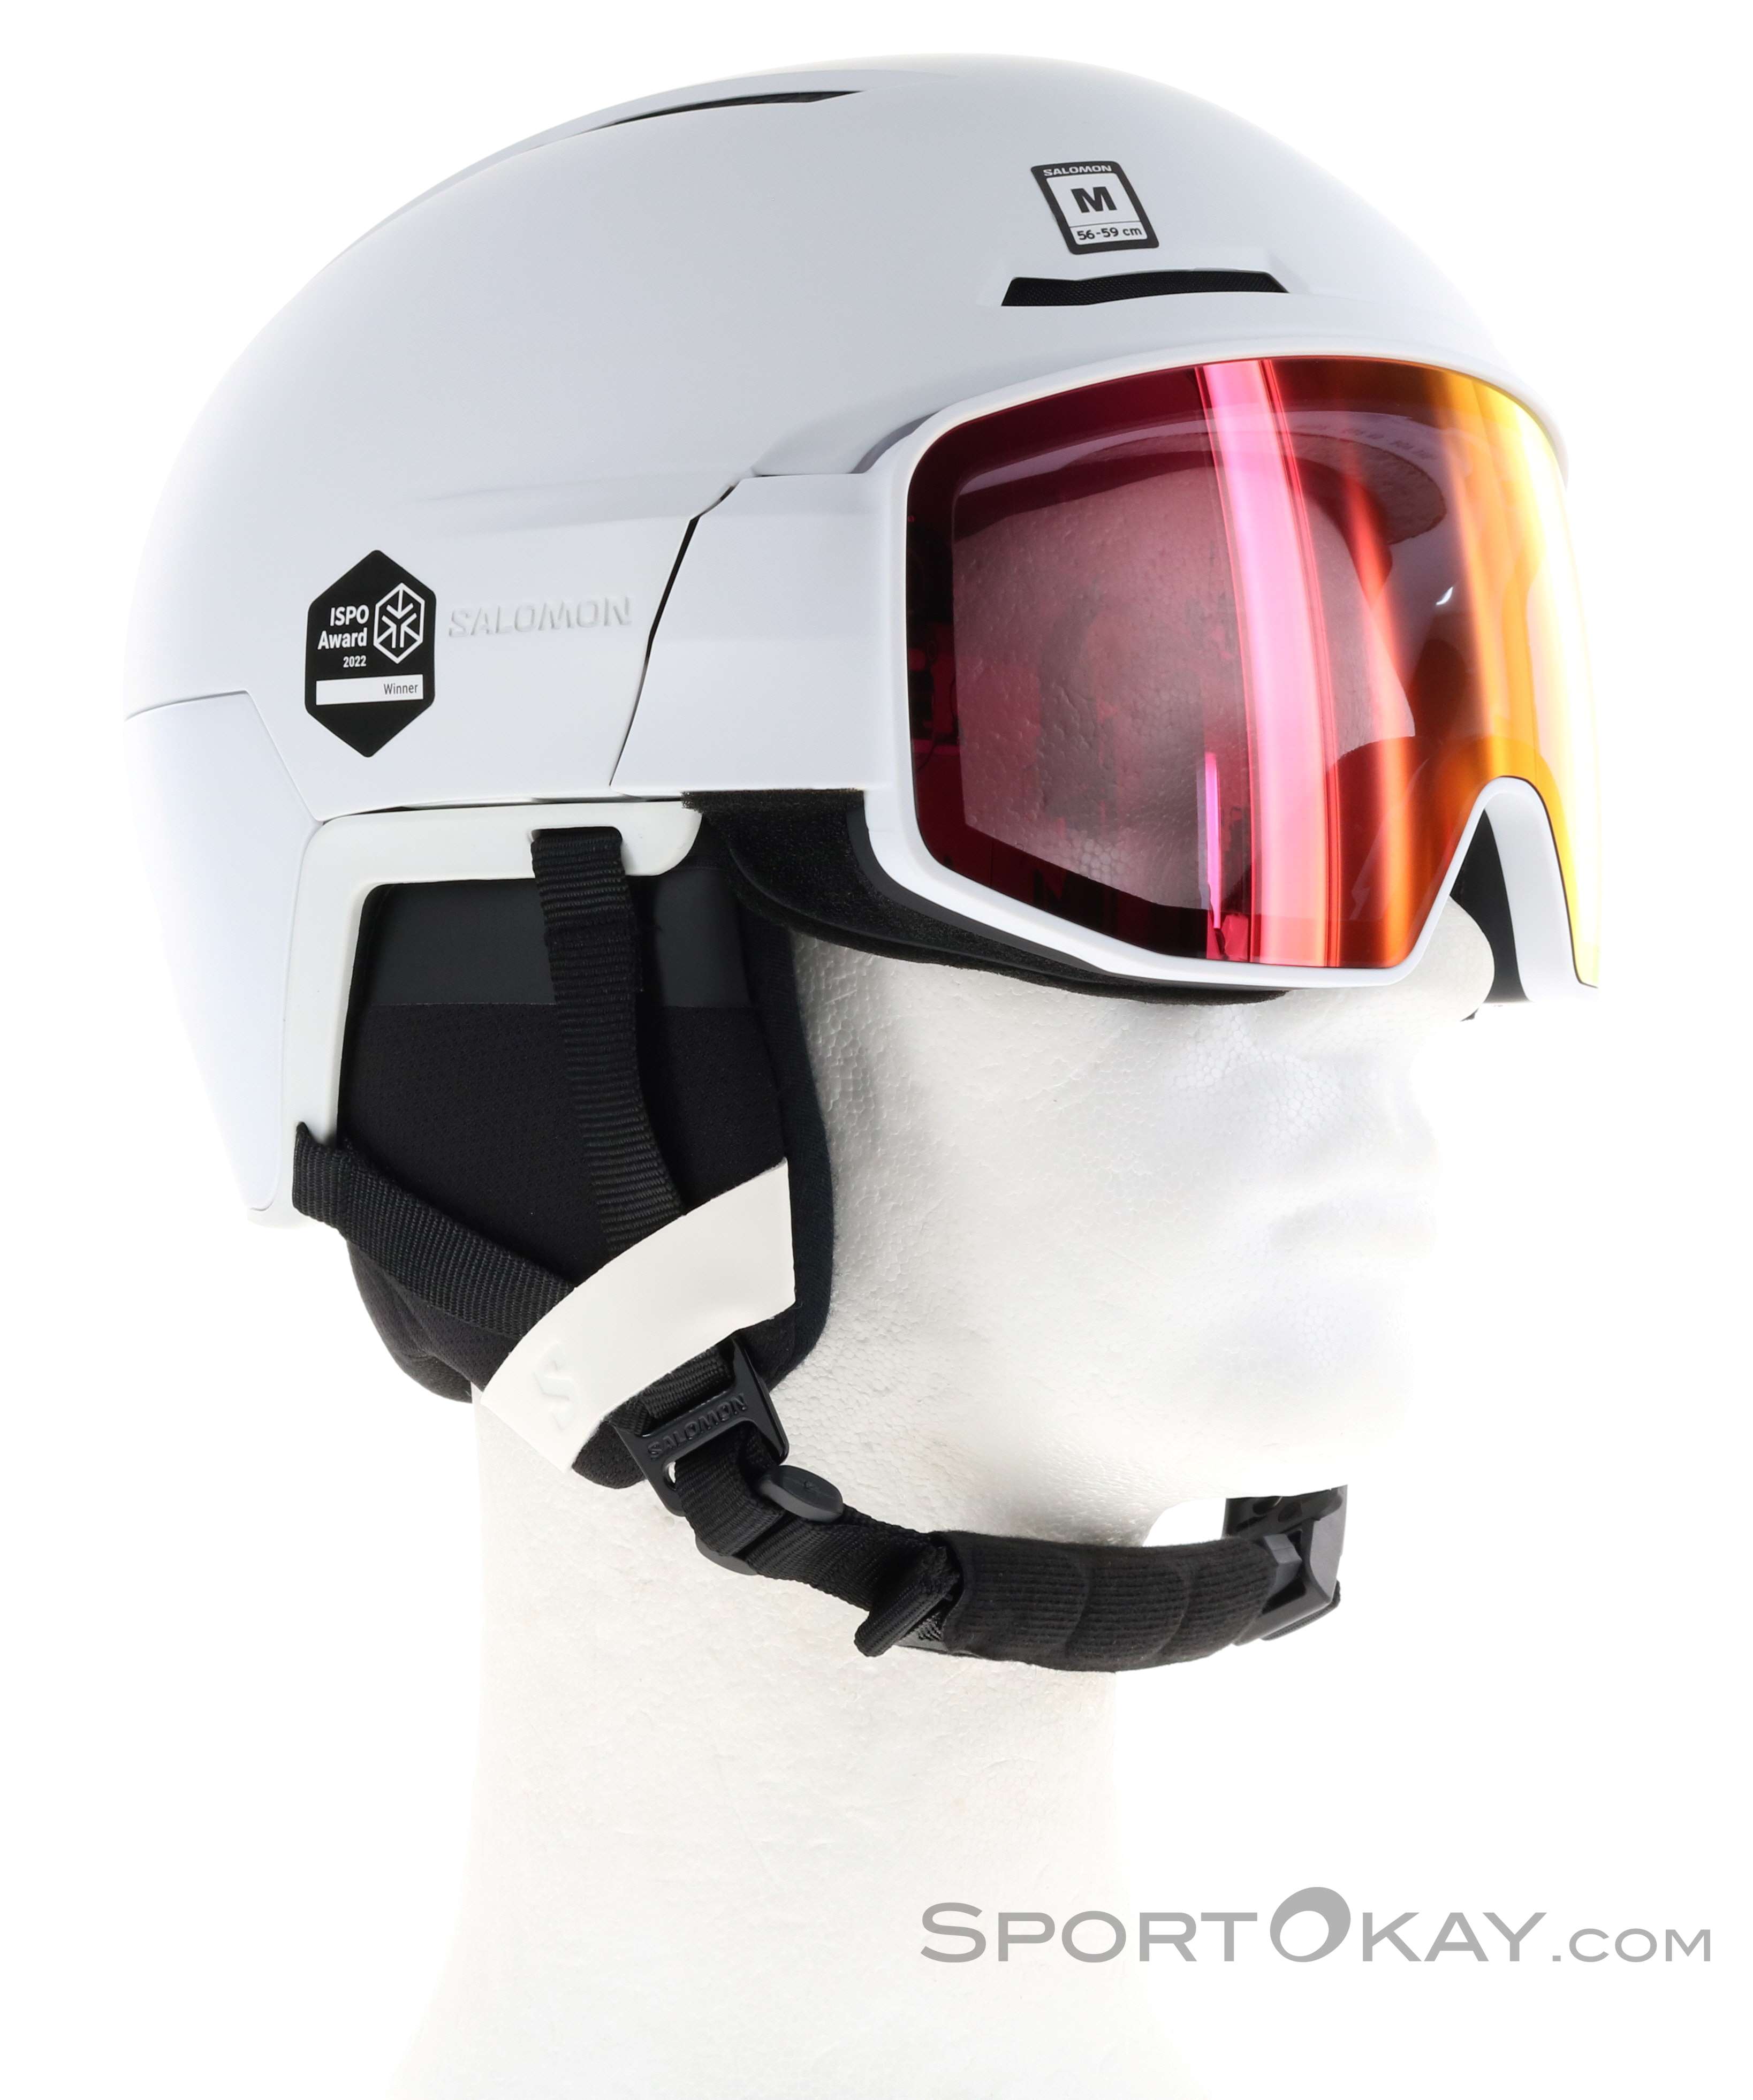 Salomon Driver Prime Sigma Plus Ski Helmet Review 